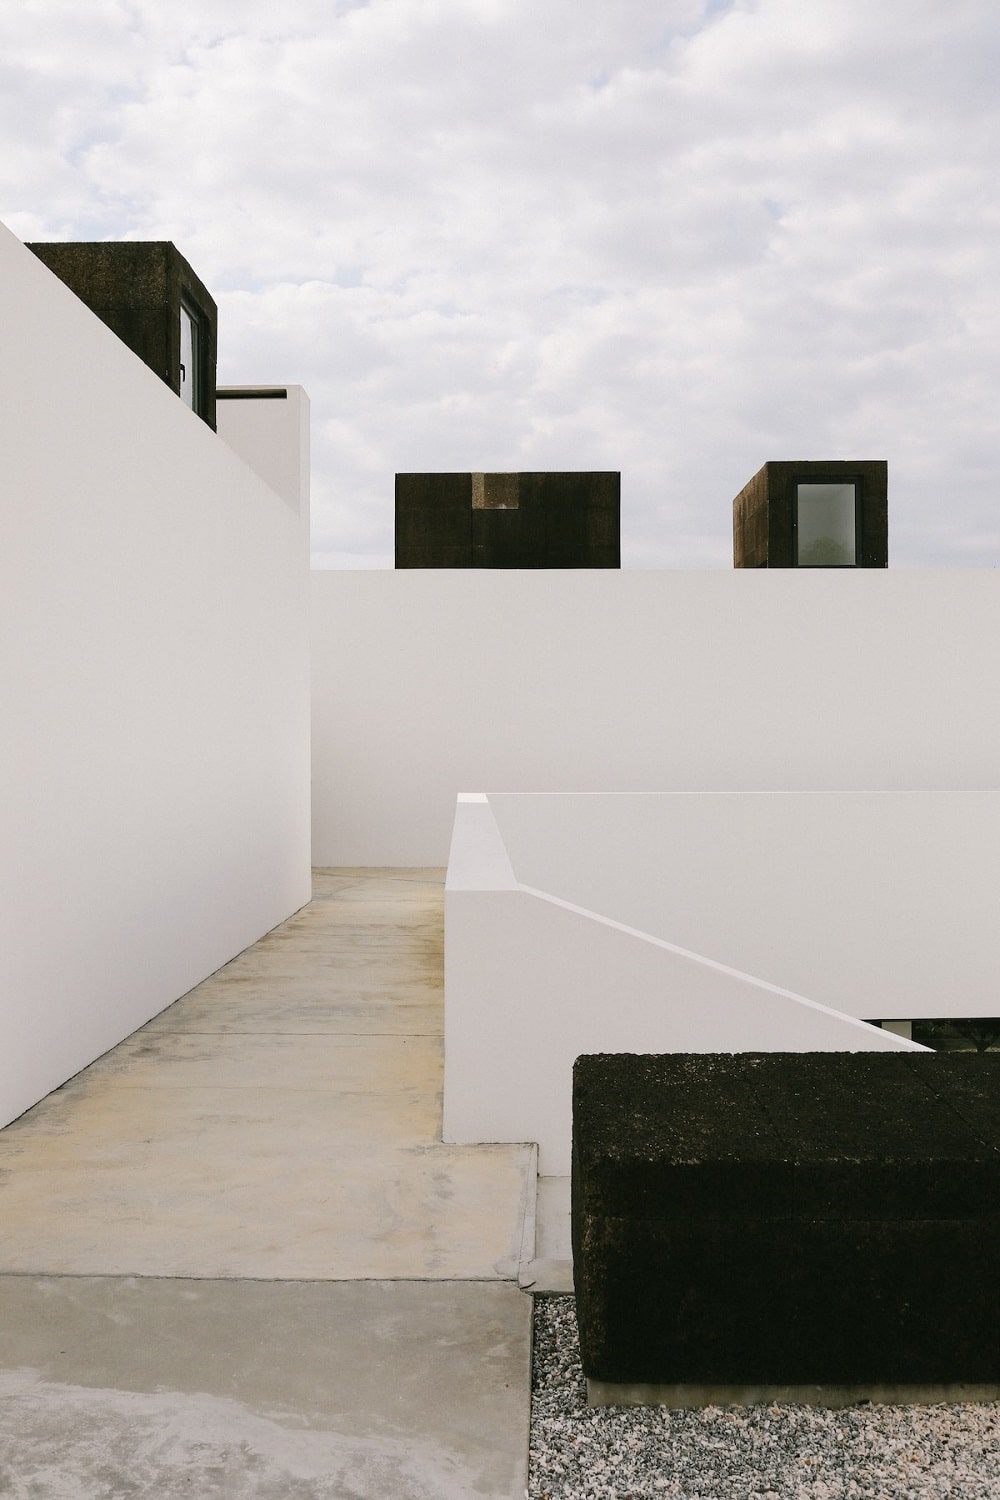 Architects: Vora Arquitectura. Location: Arraiolos, Alentejo, Portugal. Photographer: Alexander Zakharov